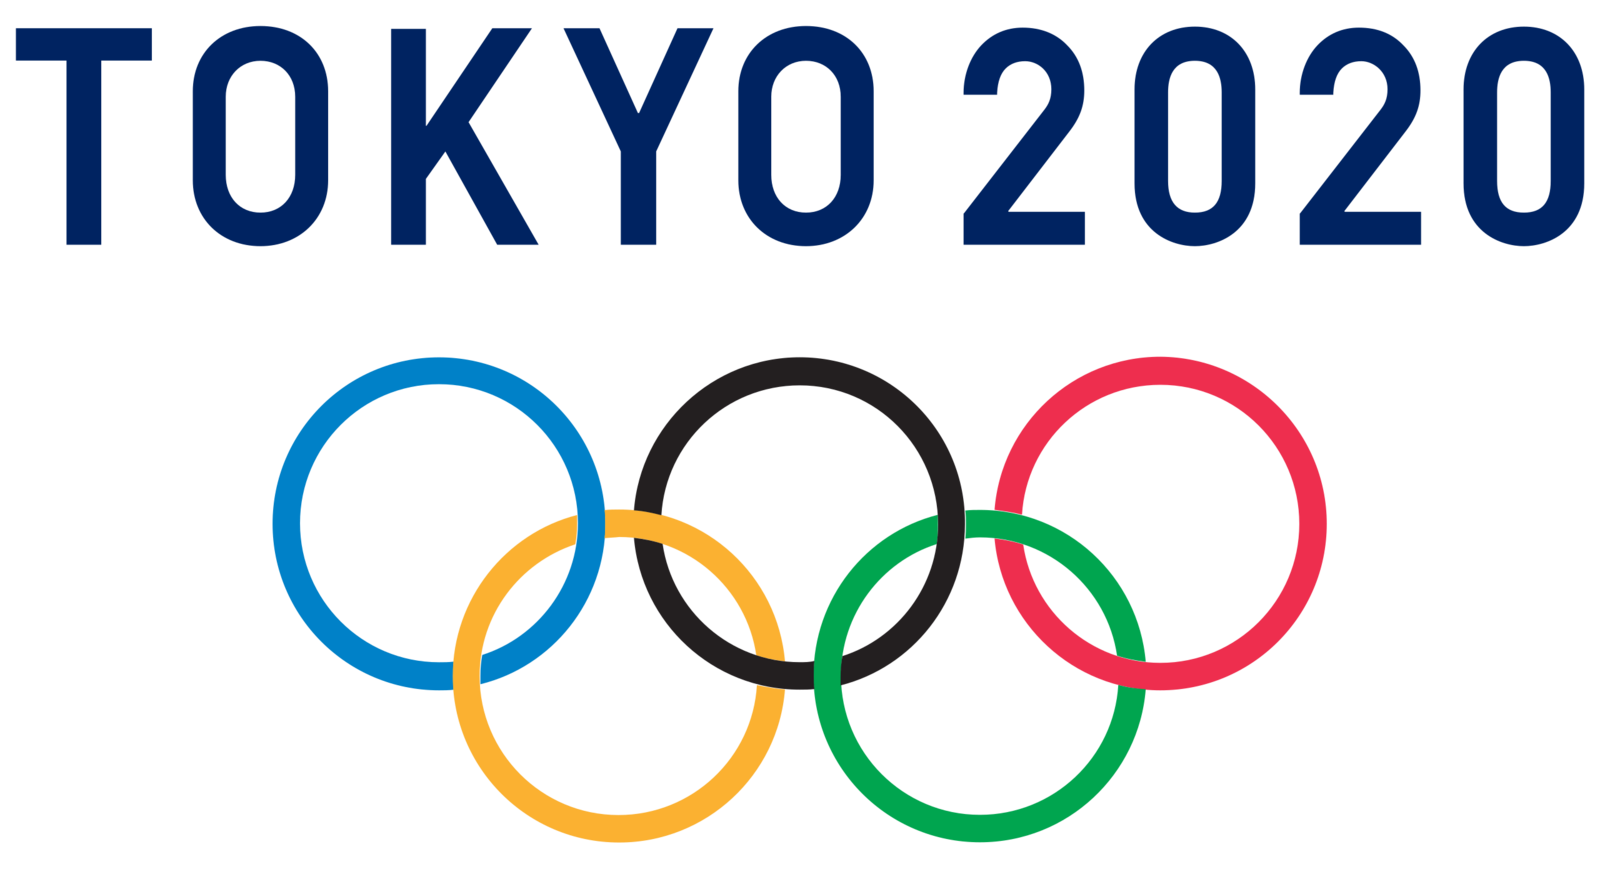 Иртәгә "Токио - 2020" олимпиадаһы асыла